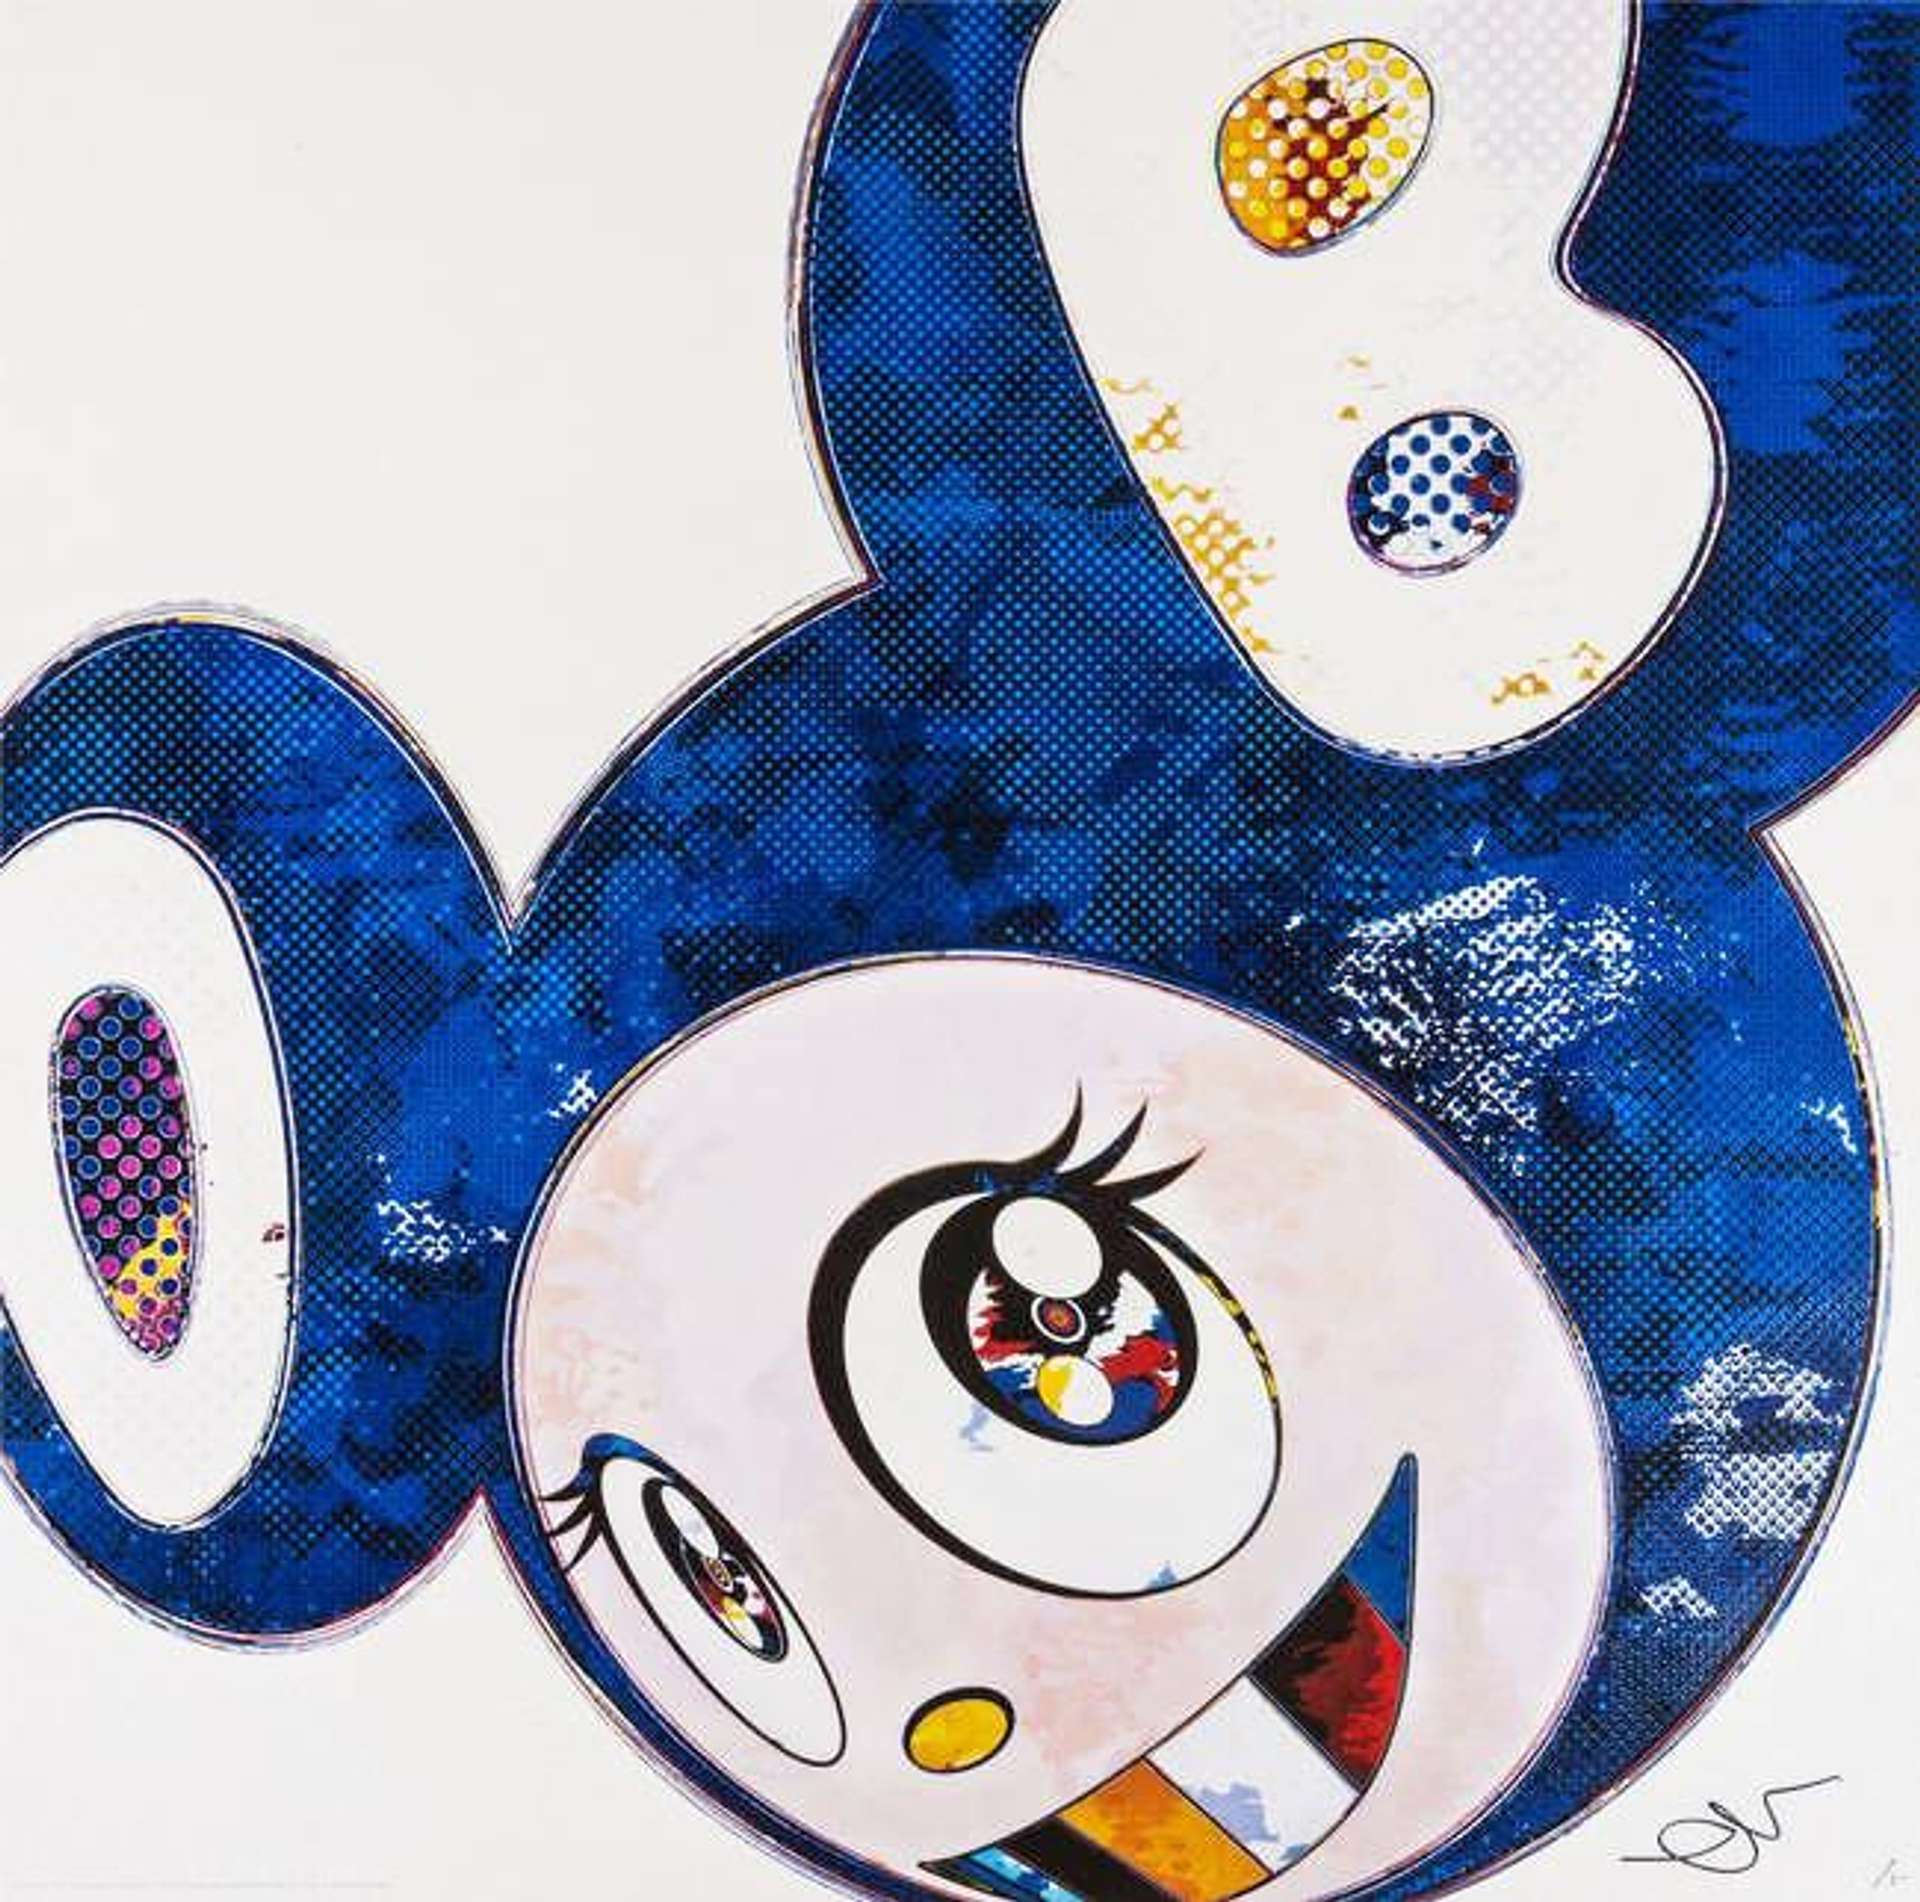 Takashi Murakami: And Then (blue) - Signed Print